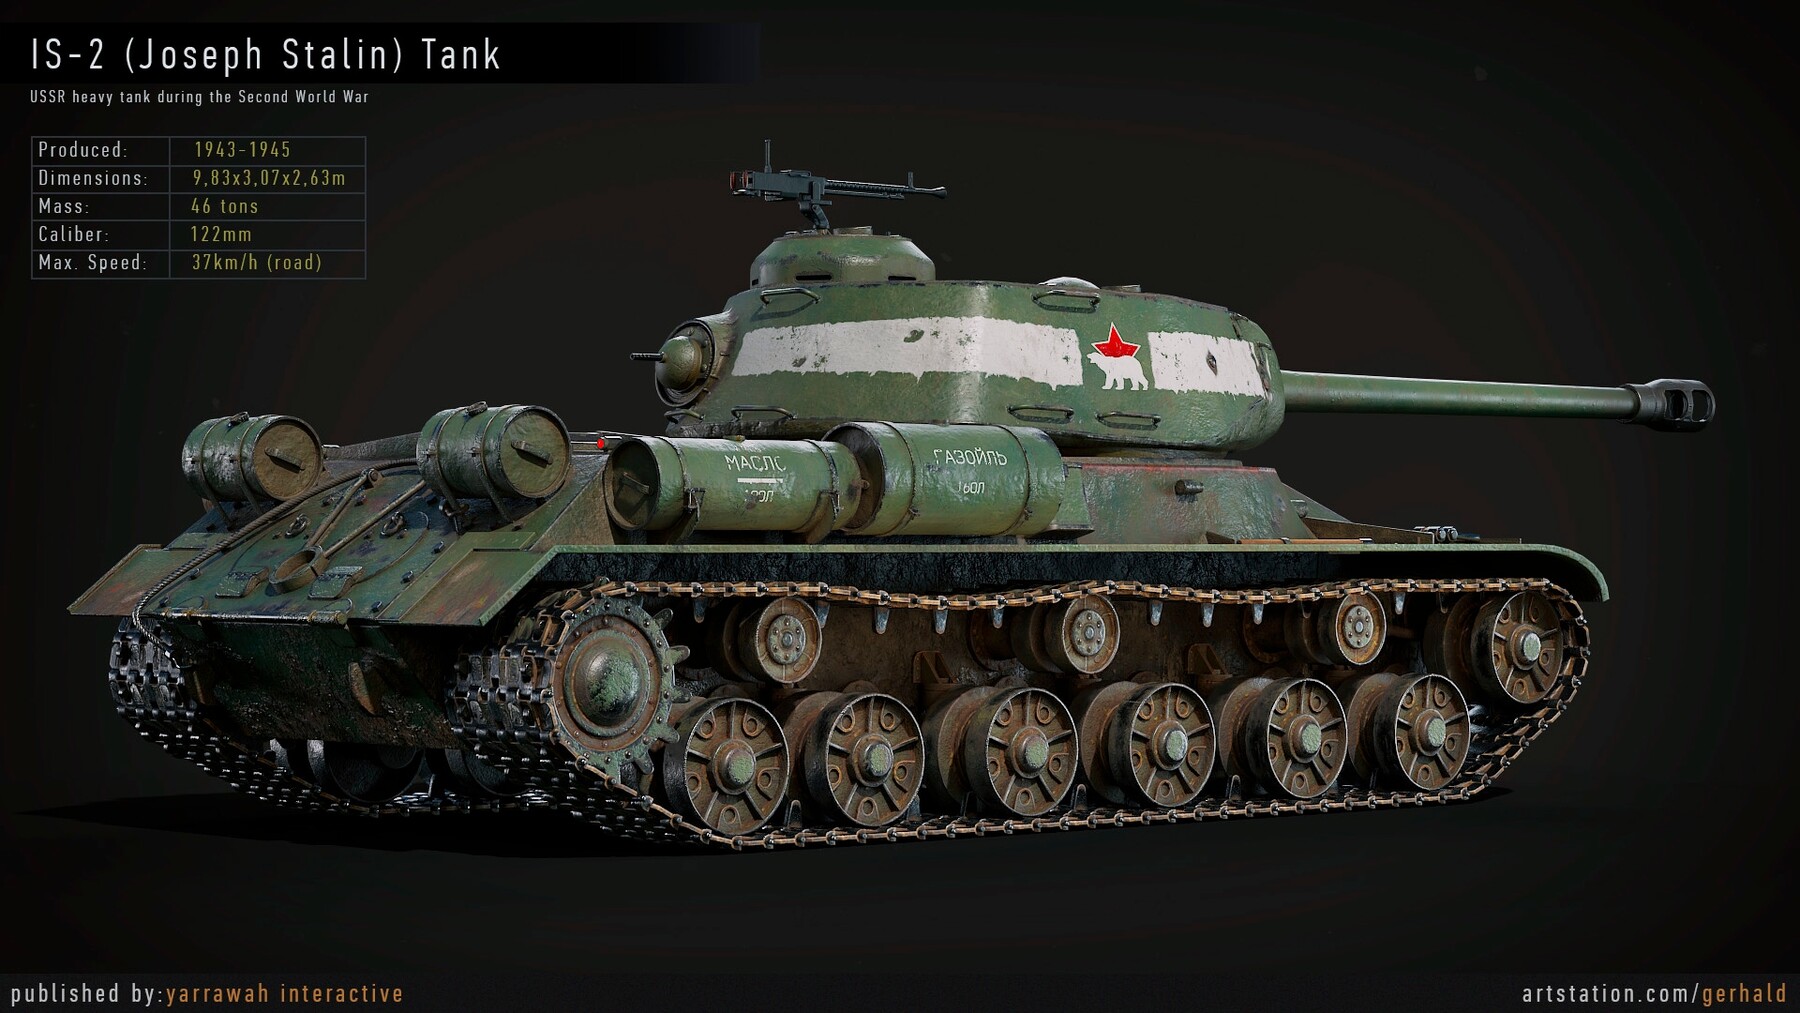 WW2 Tank - KV1 - Advanced Tank Blueprint in Blueprints - UE Marketplace